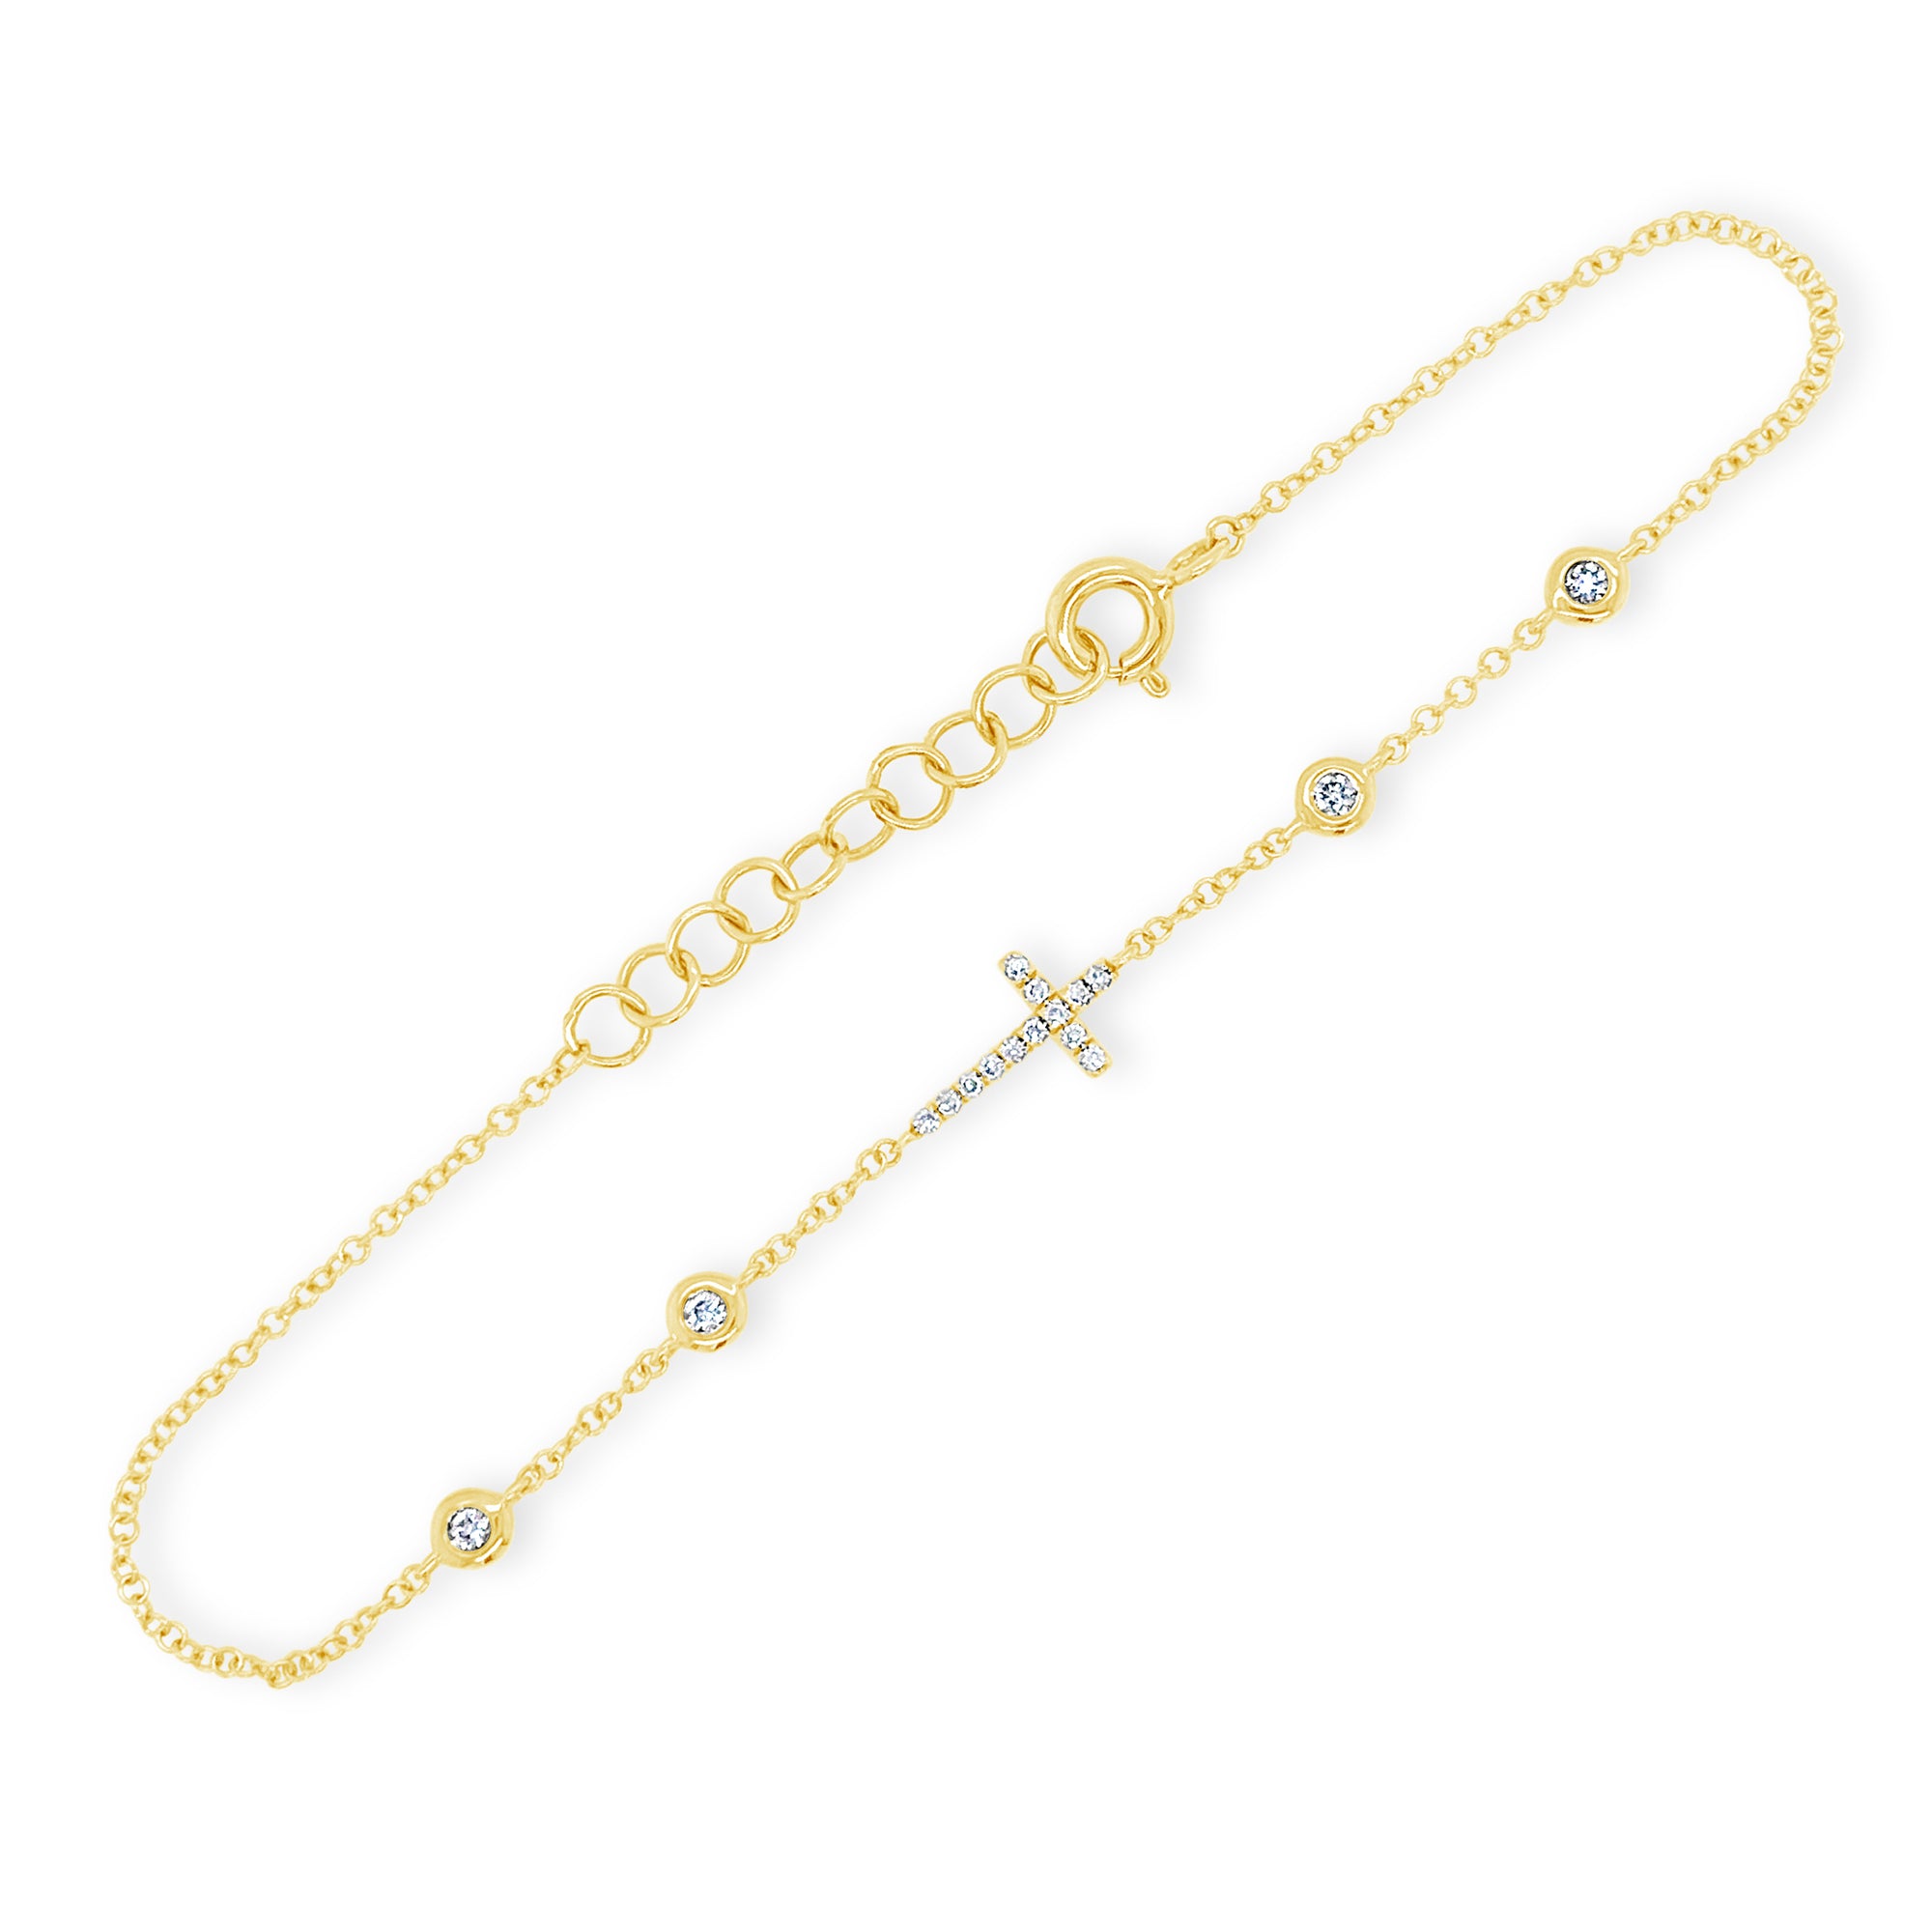 Diamond Cross Chain Bracelet - 14K yellow gold weighing 1.21 grams - 17 round diamonds totaling 0.10 carats